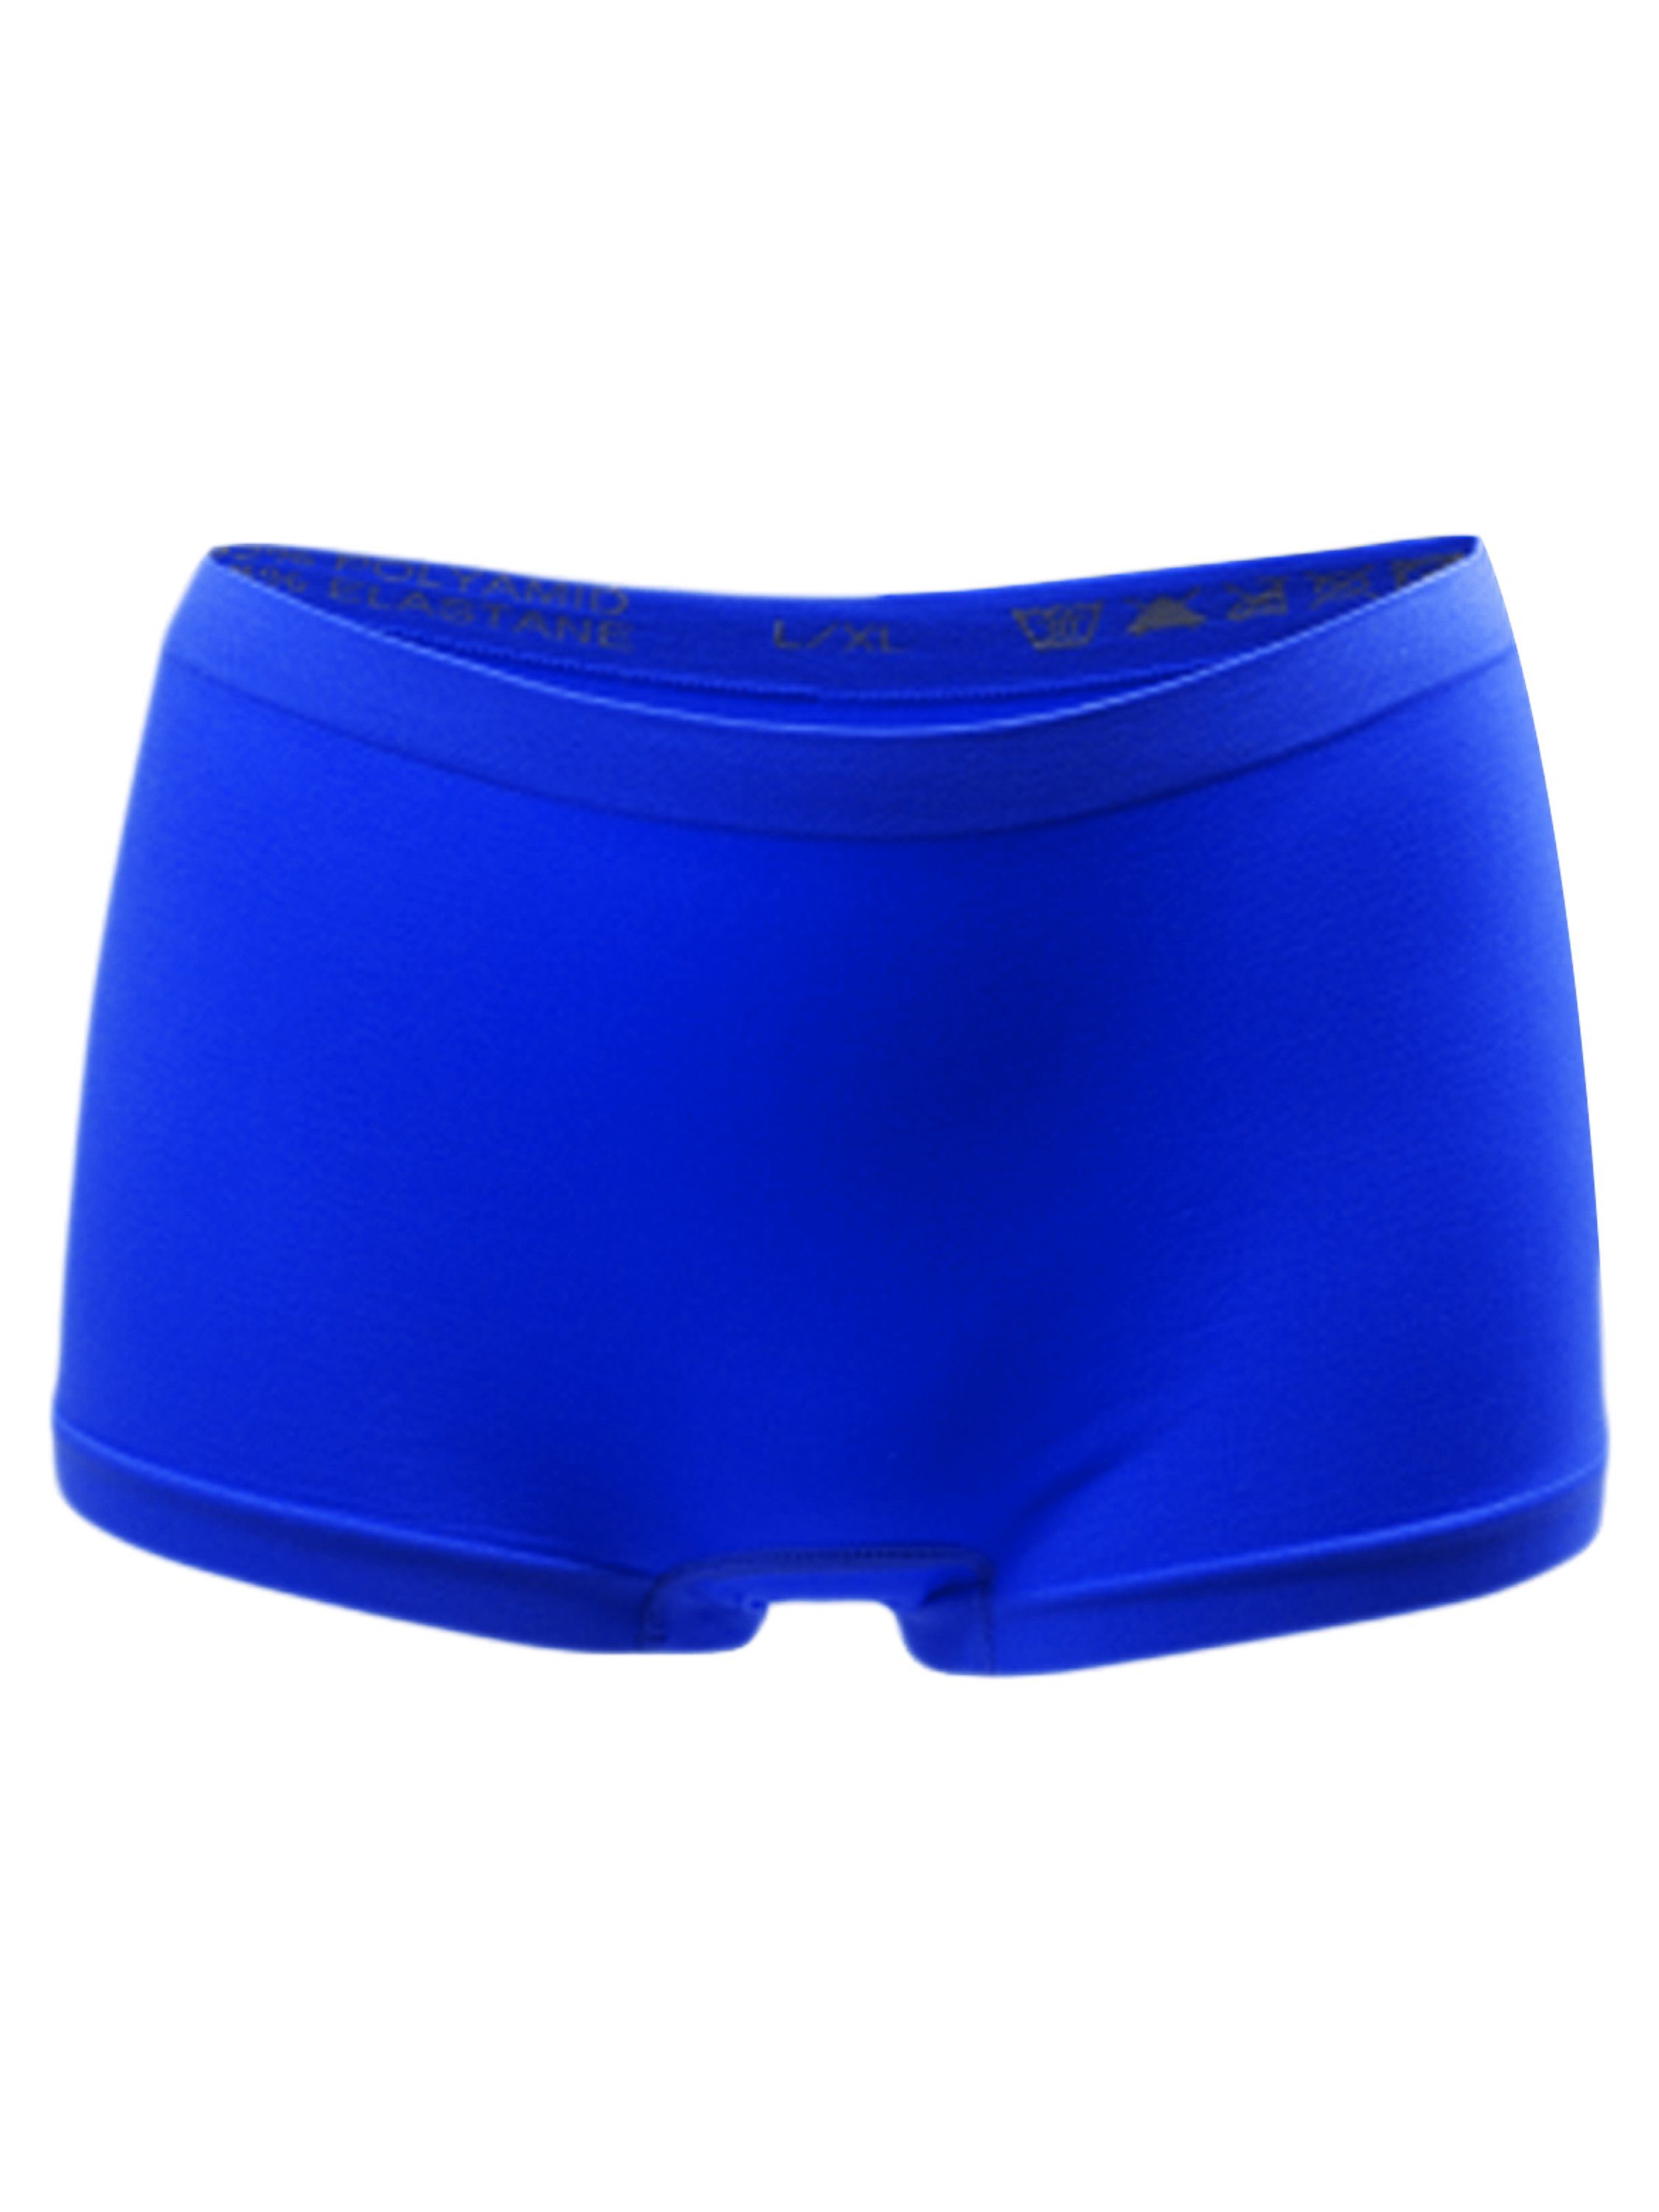 TEXEMP Panty 8er Pack 8er-Pack) Panty S/M Panties Unterwäsche Hotpants Slip Slips Microfaser Damen L/XL (Spar-Pack, Schlüpfer